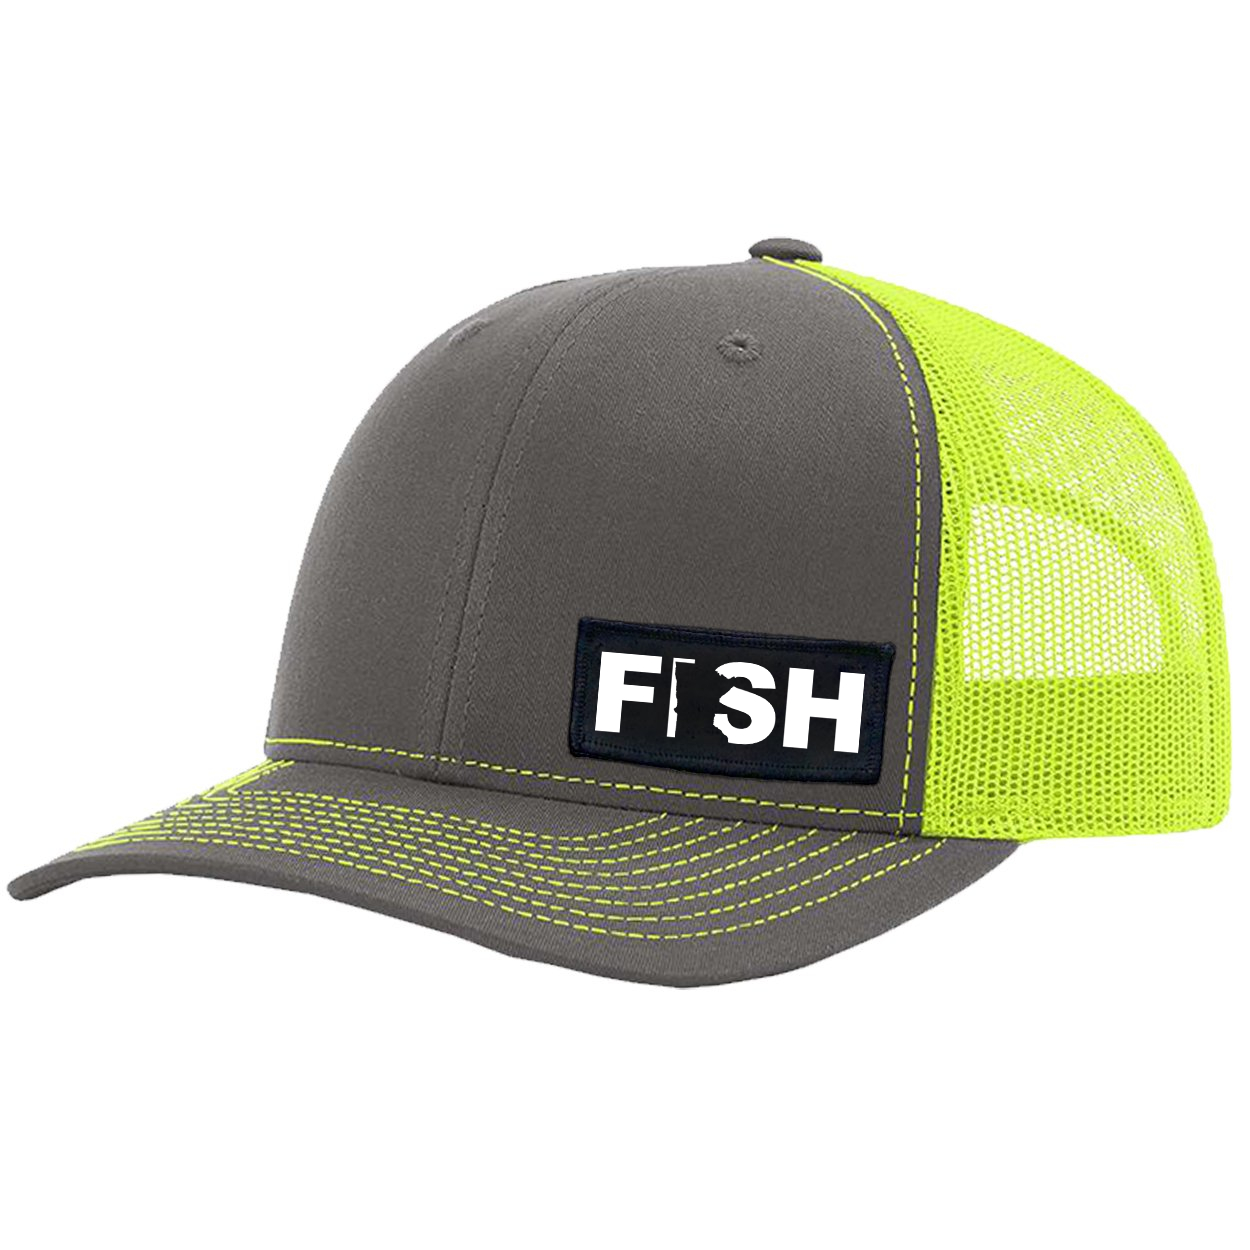 Fish Minnesota Night Out Woven Patch Snapback Trucker Hat Charcoal/Neon Yellow (White Logo)